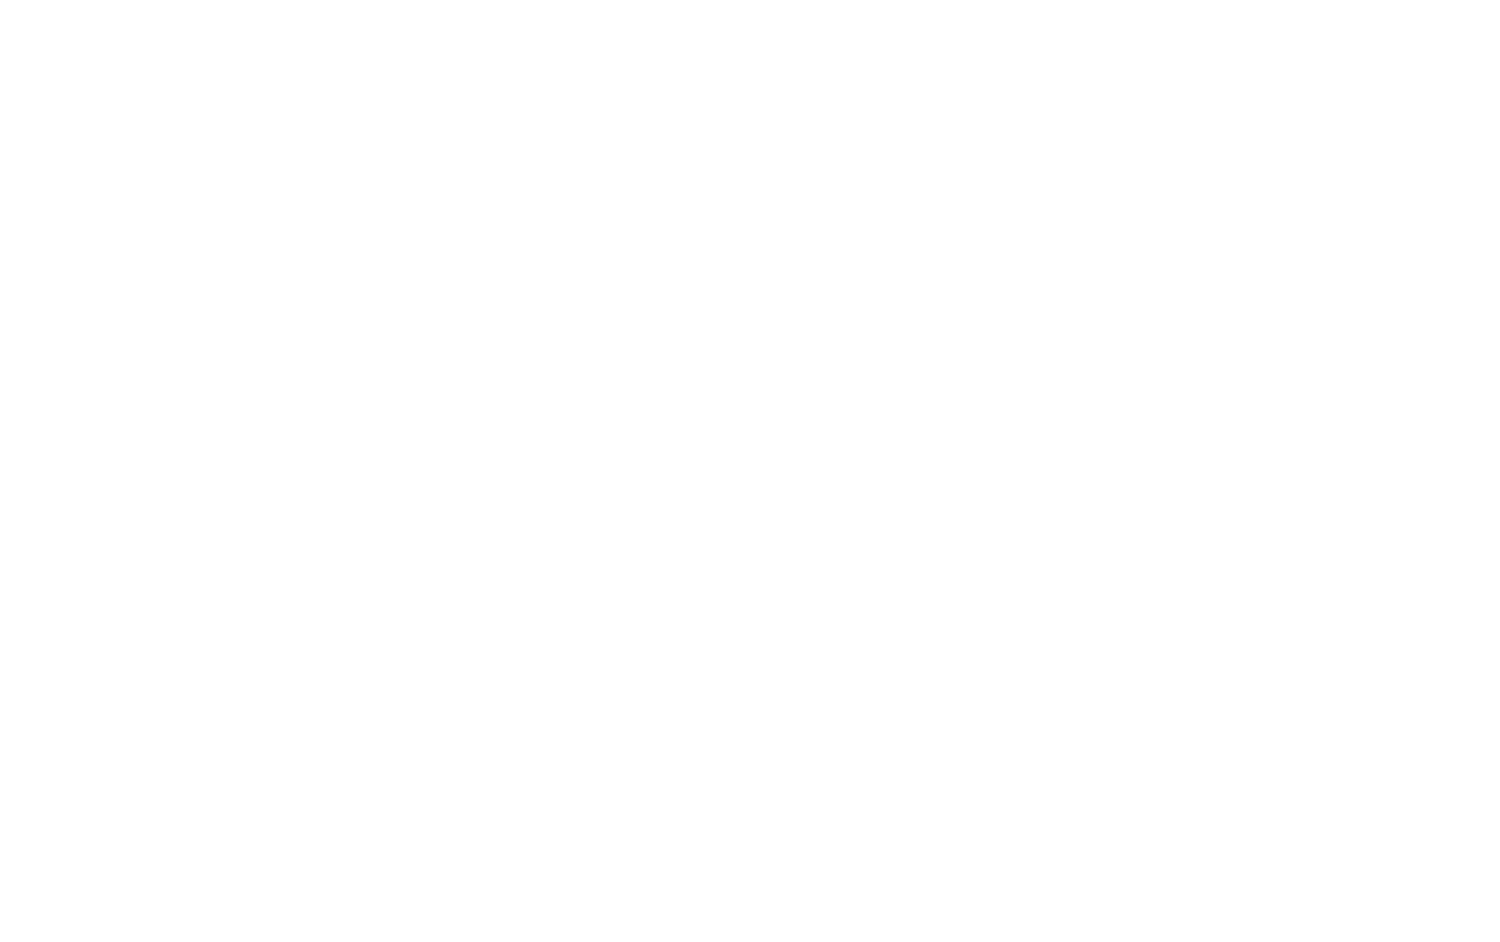 eaton space